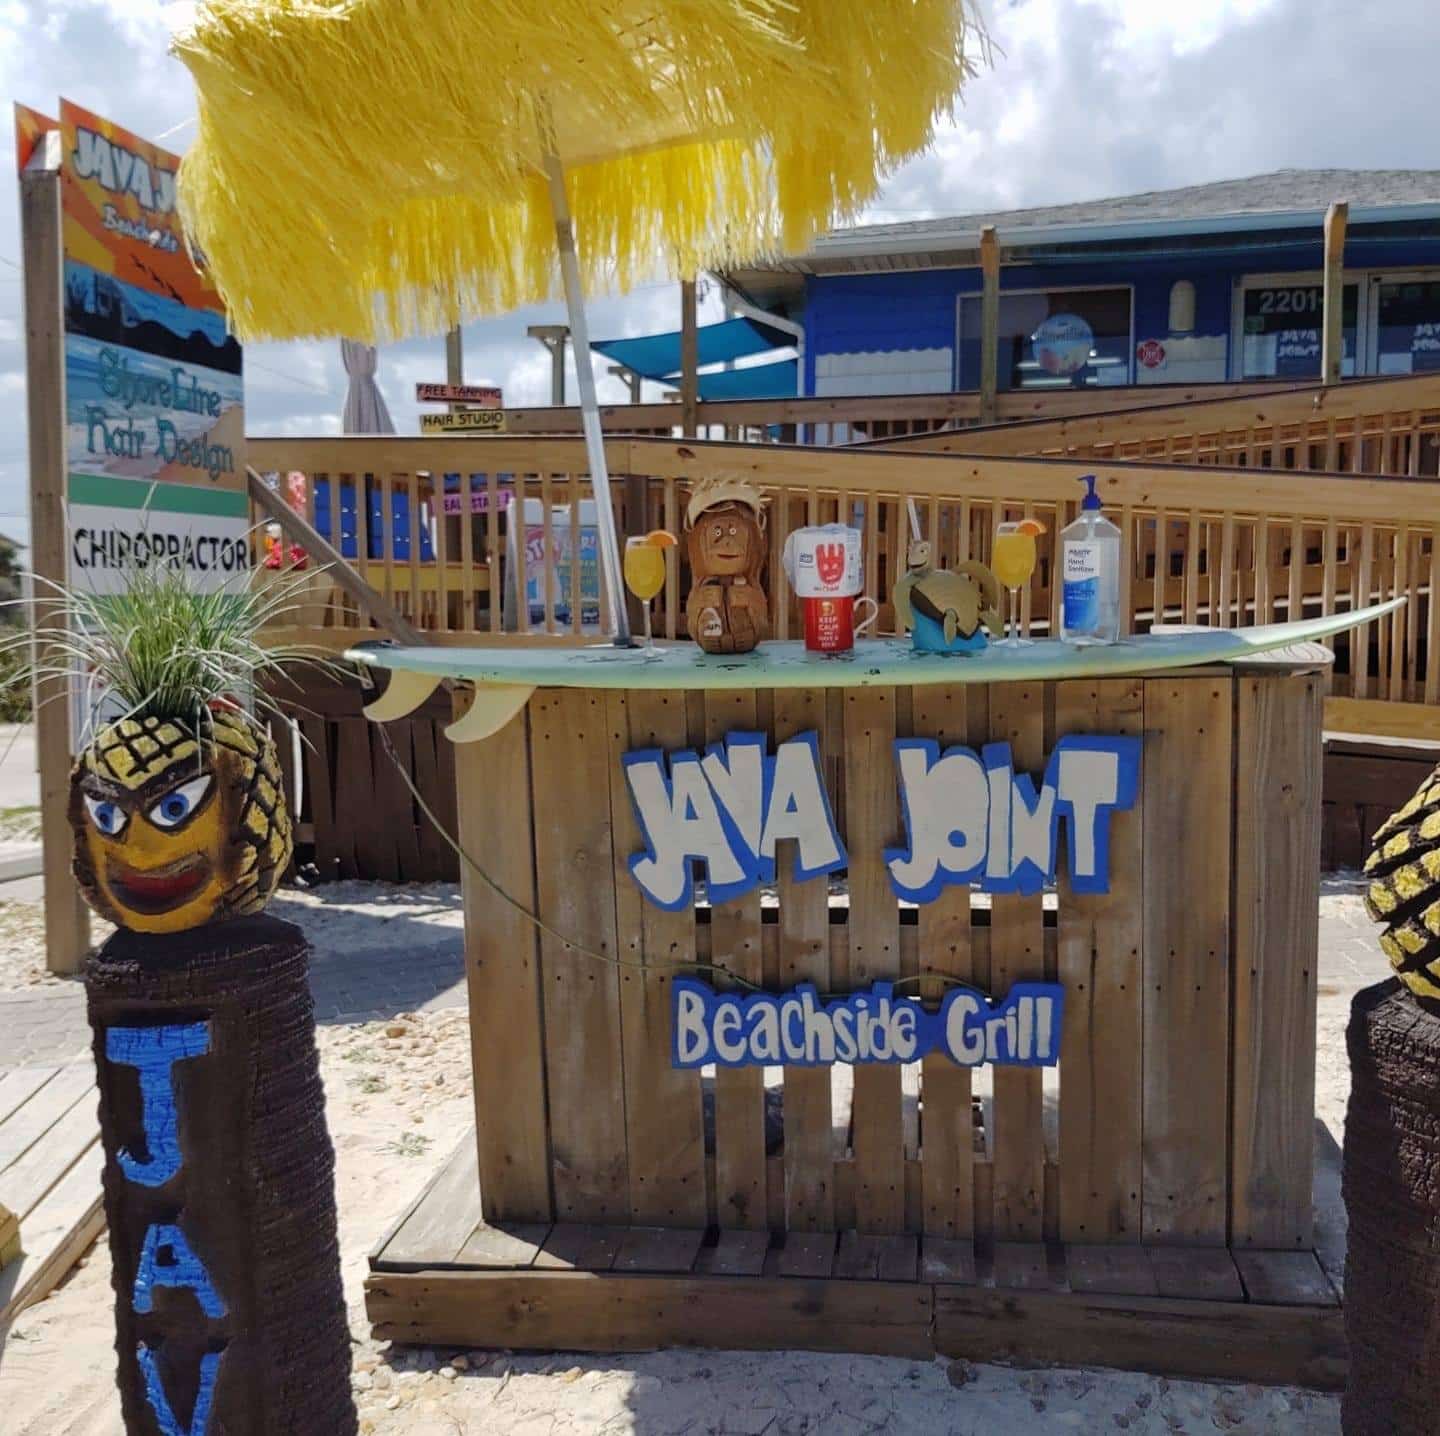 Java Joint Beachside Grill in Flagler Beach Florida